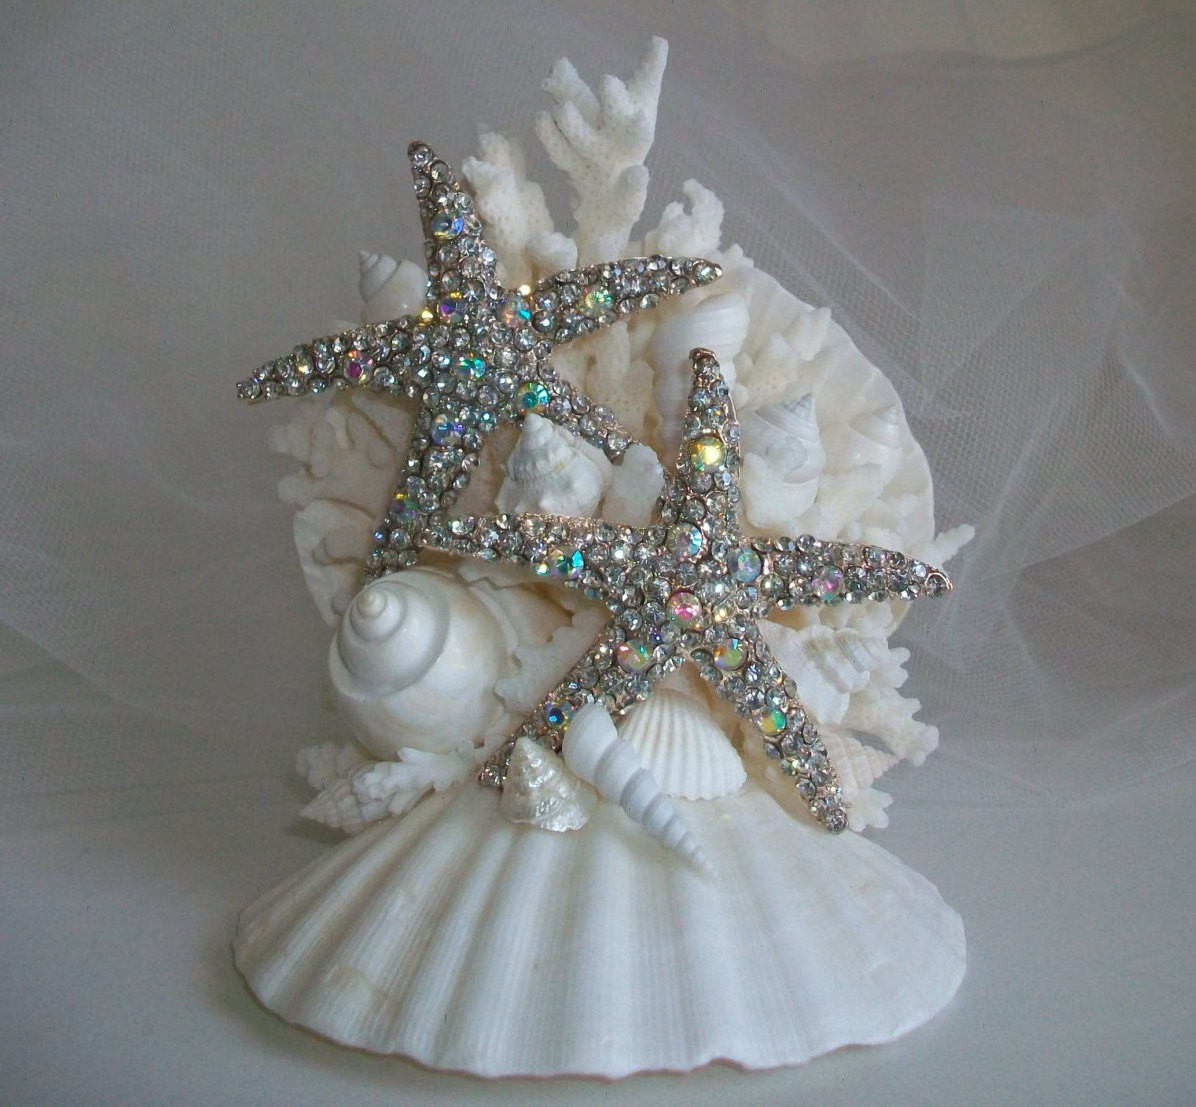 Beach Theme Wedding Cake Toppers
 Beach Theme Wedding Cake Topper Jeweled Starfish Seashell